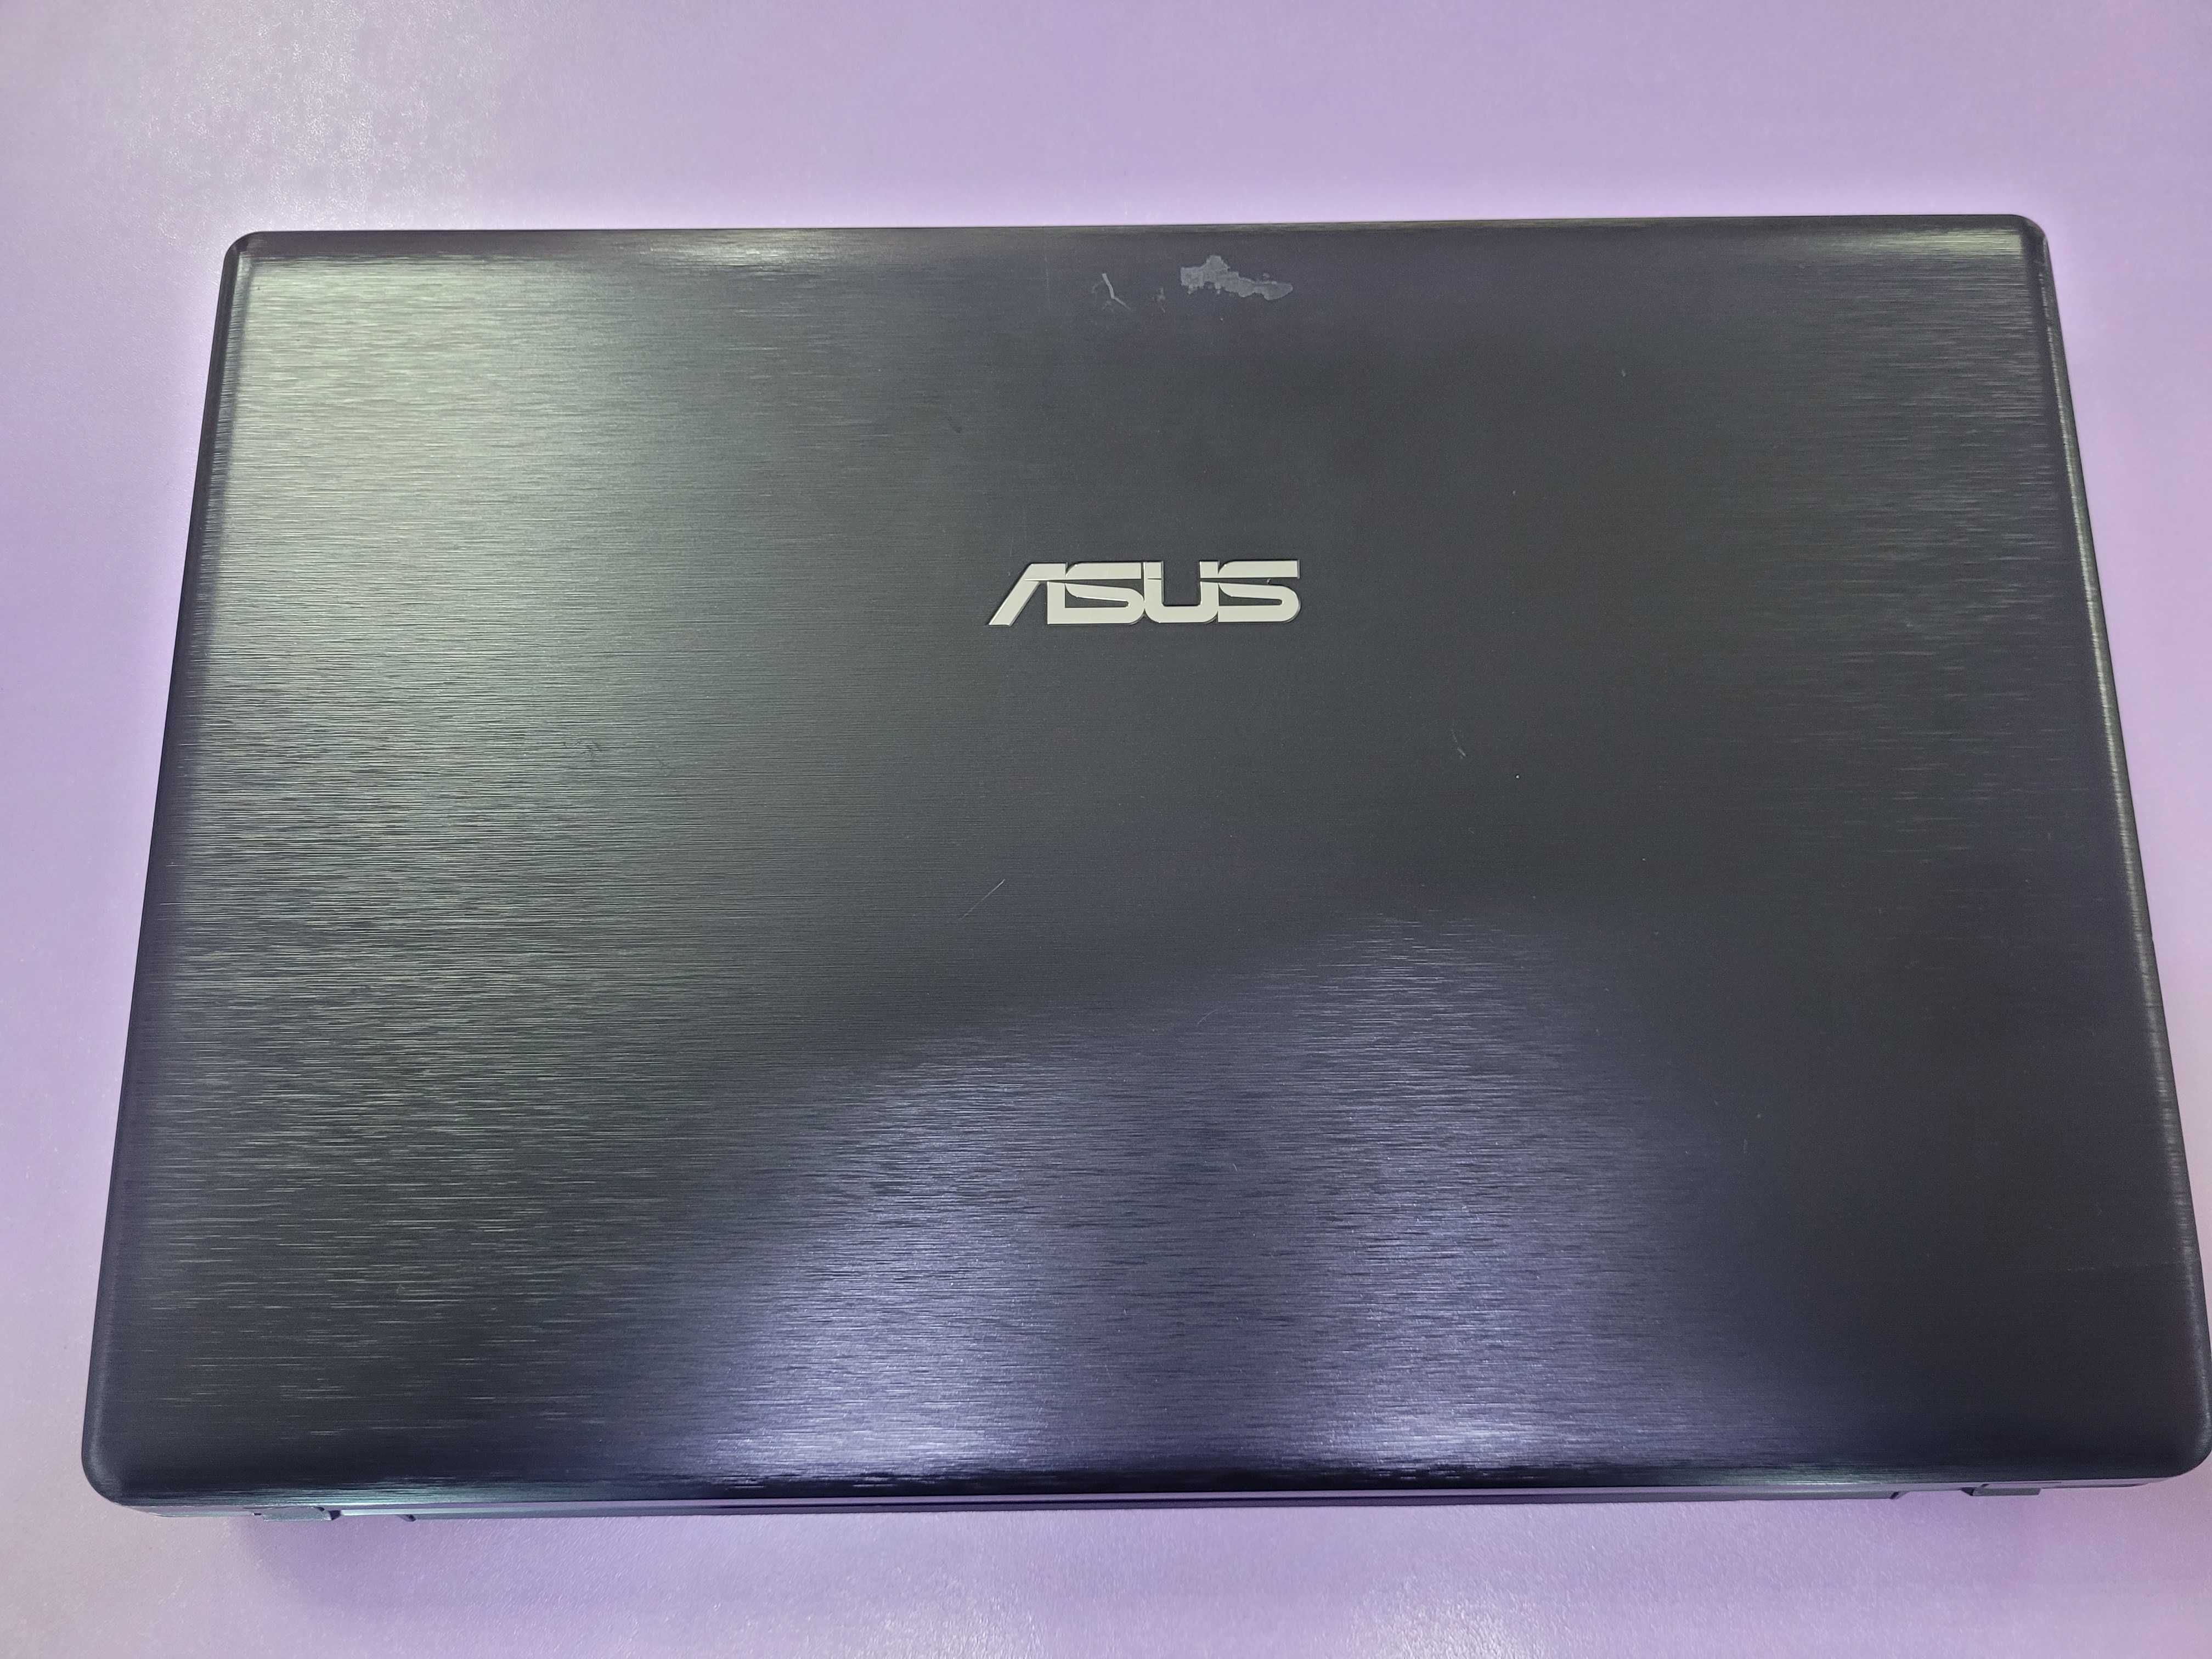 Ноутбук Asus core i3. Продам или обмен